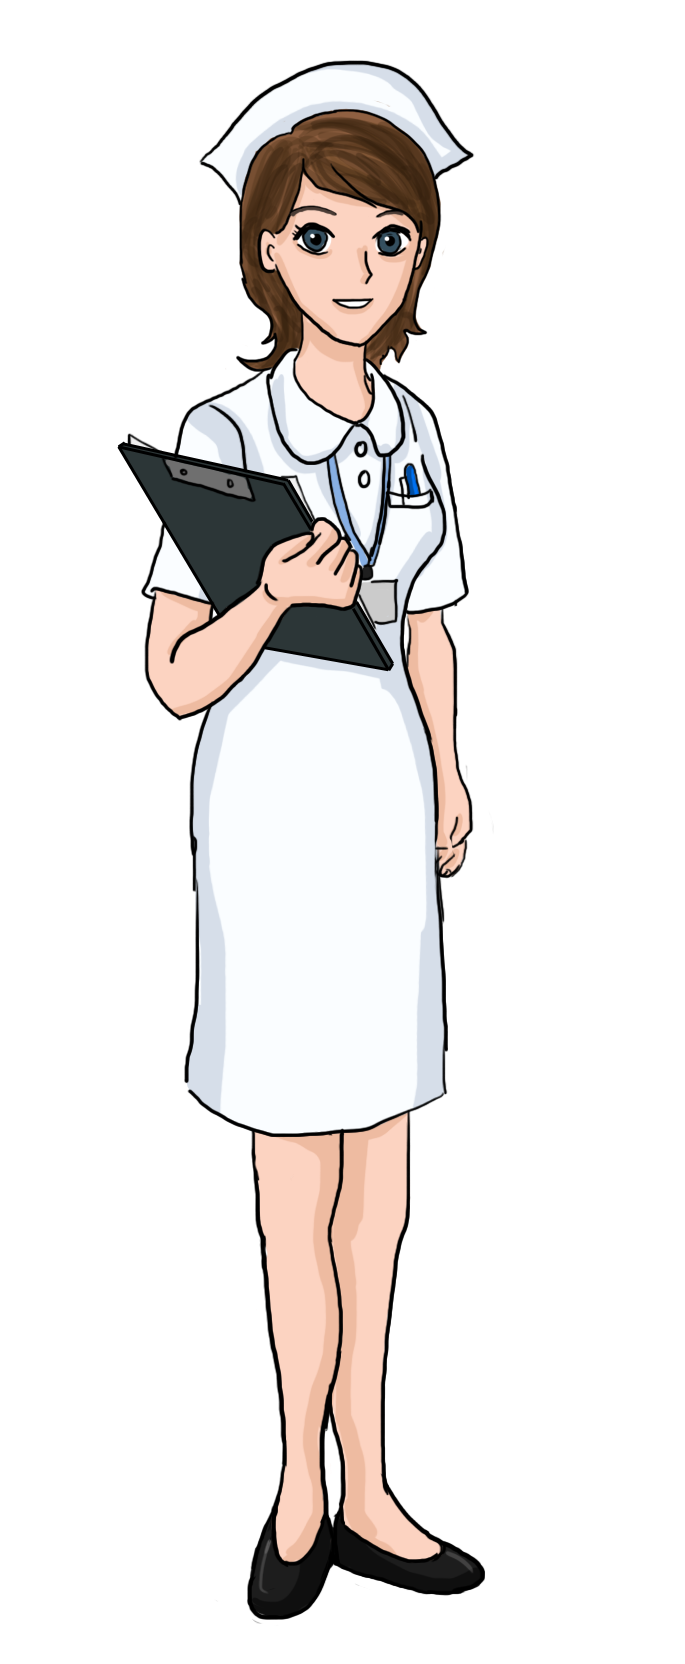 Cartoon pictures of nurses clipart image #4521